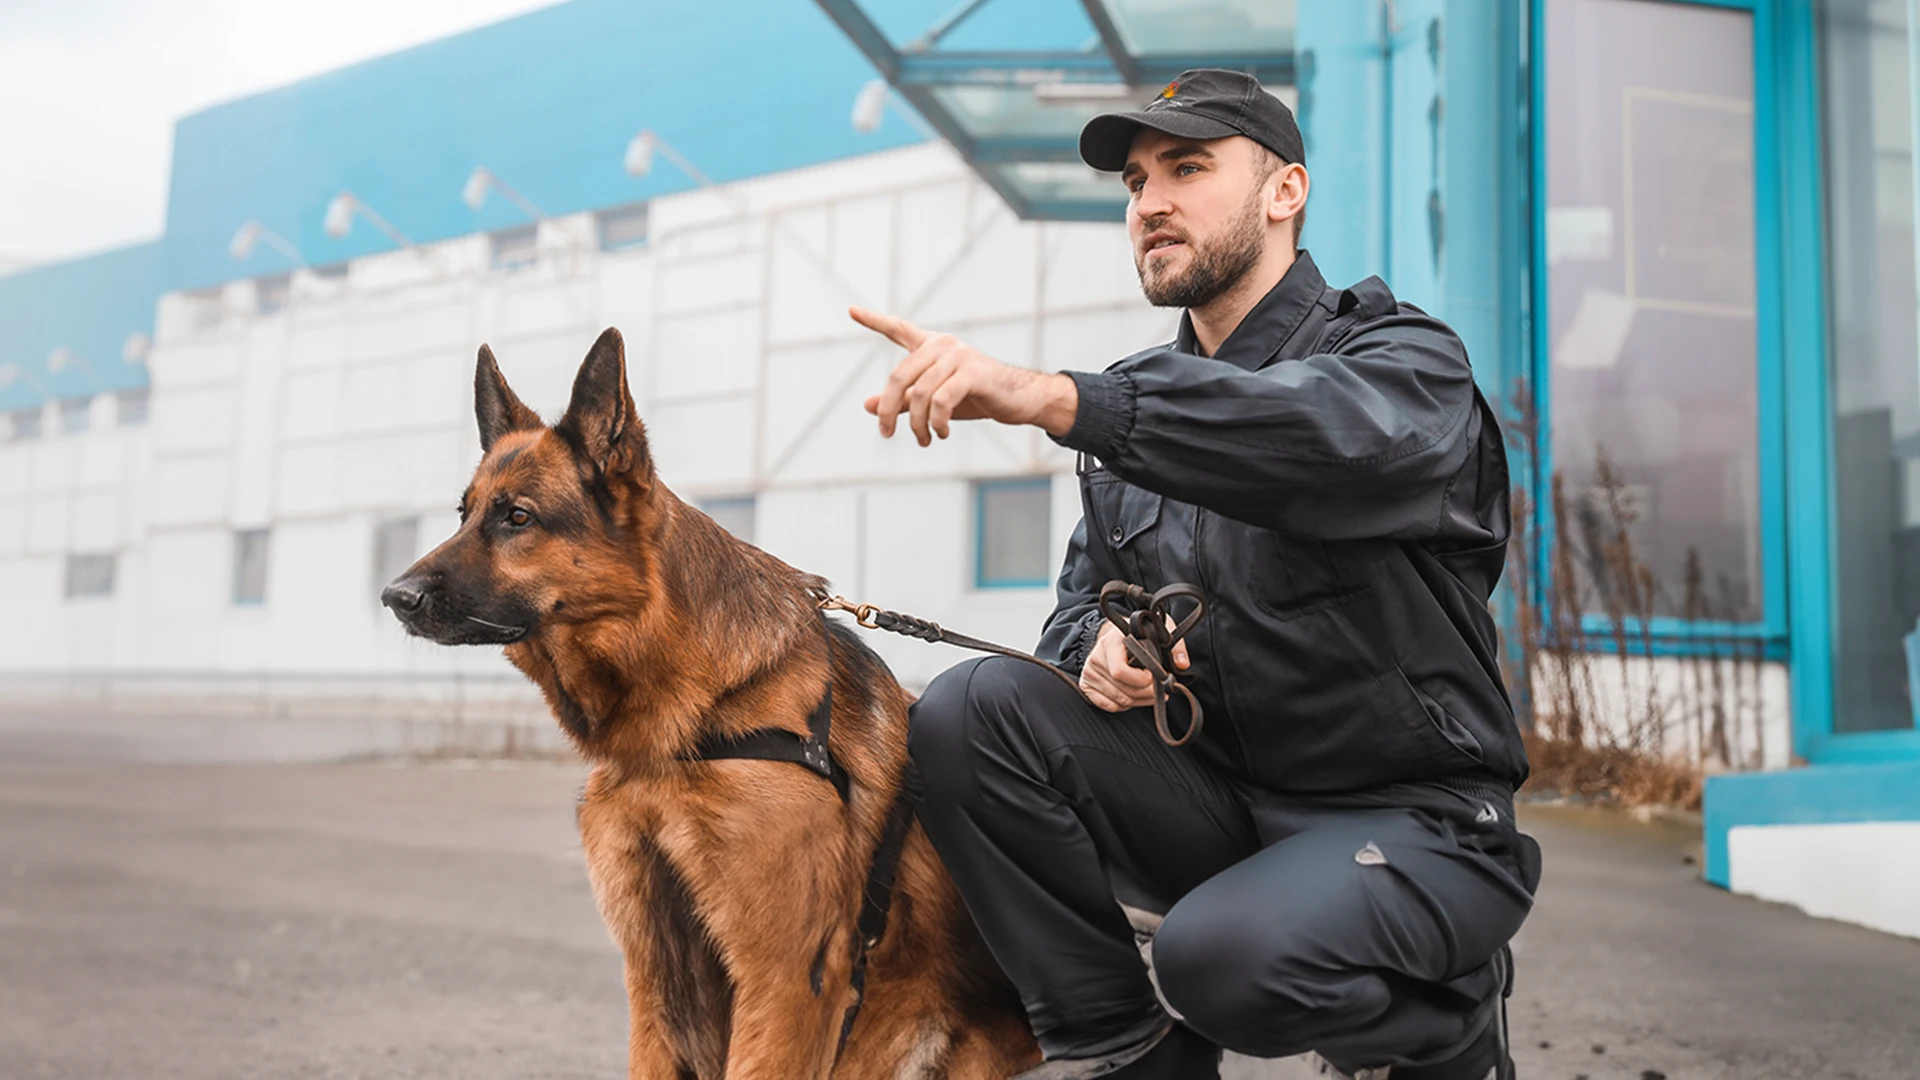 K9 security guard in Guard Mark uniform handles watchdog, securing premises against theft, vandalism with vigilance.